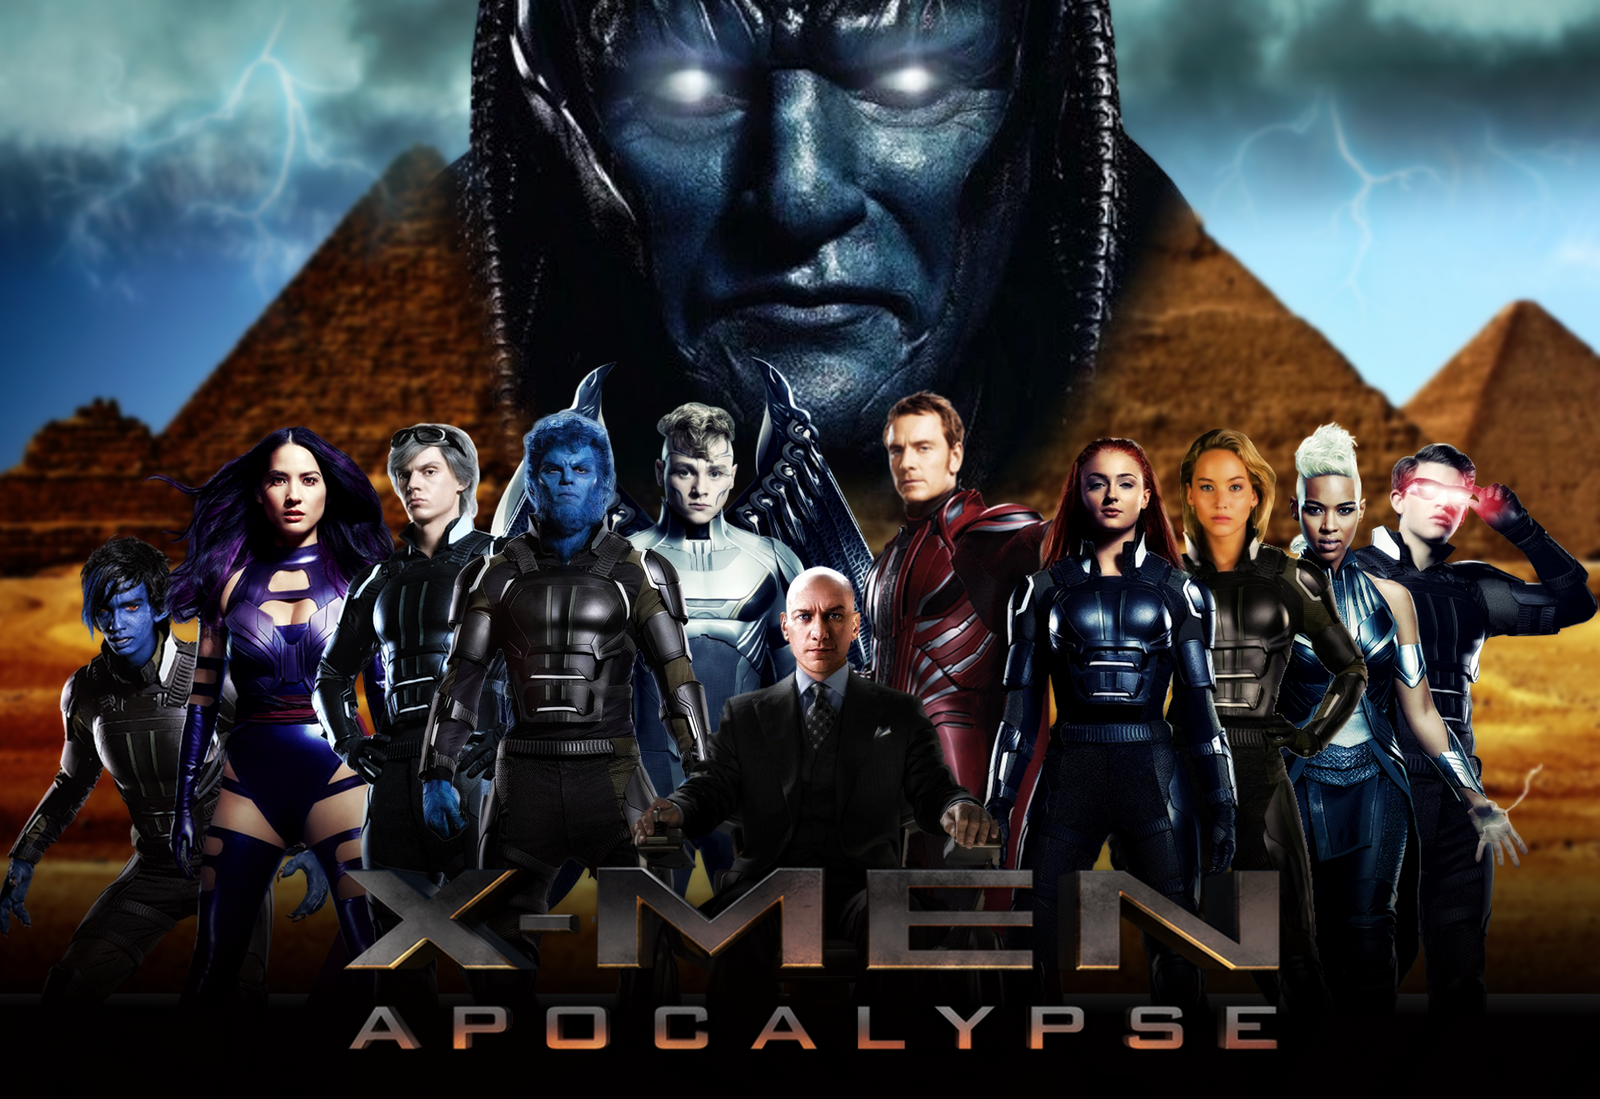 X men Apocalypse wallpaper by ArkhamNatic on DeviantArt